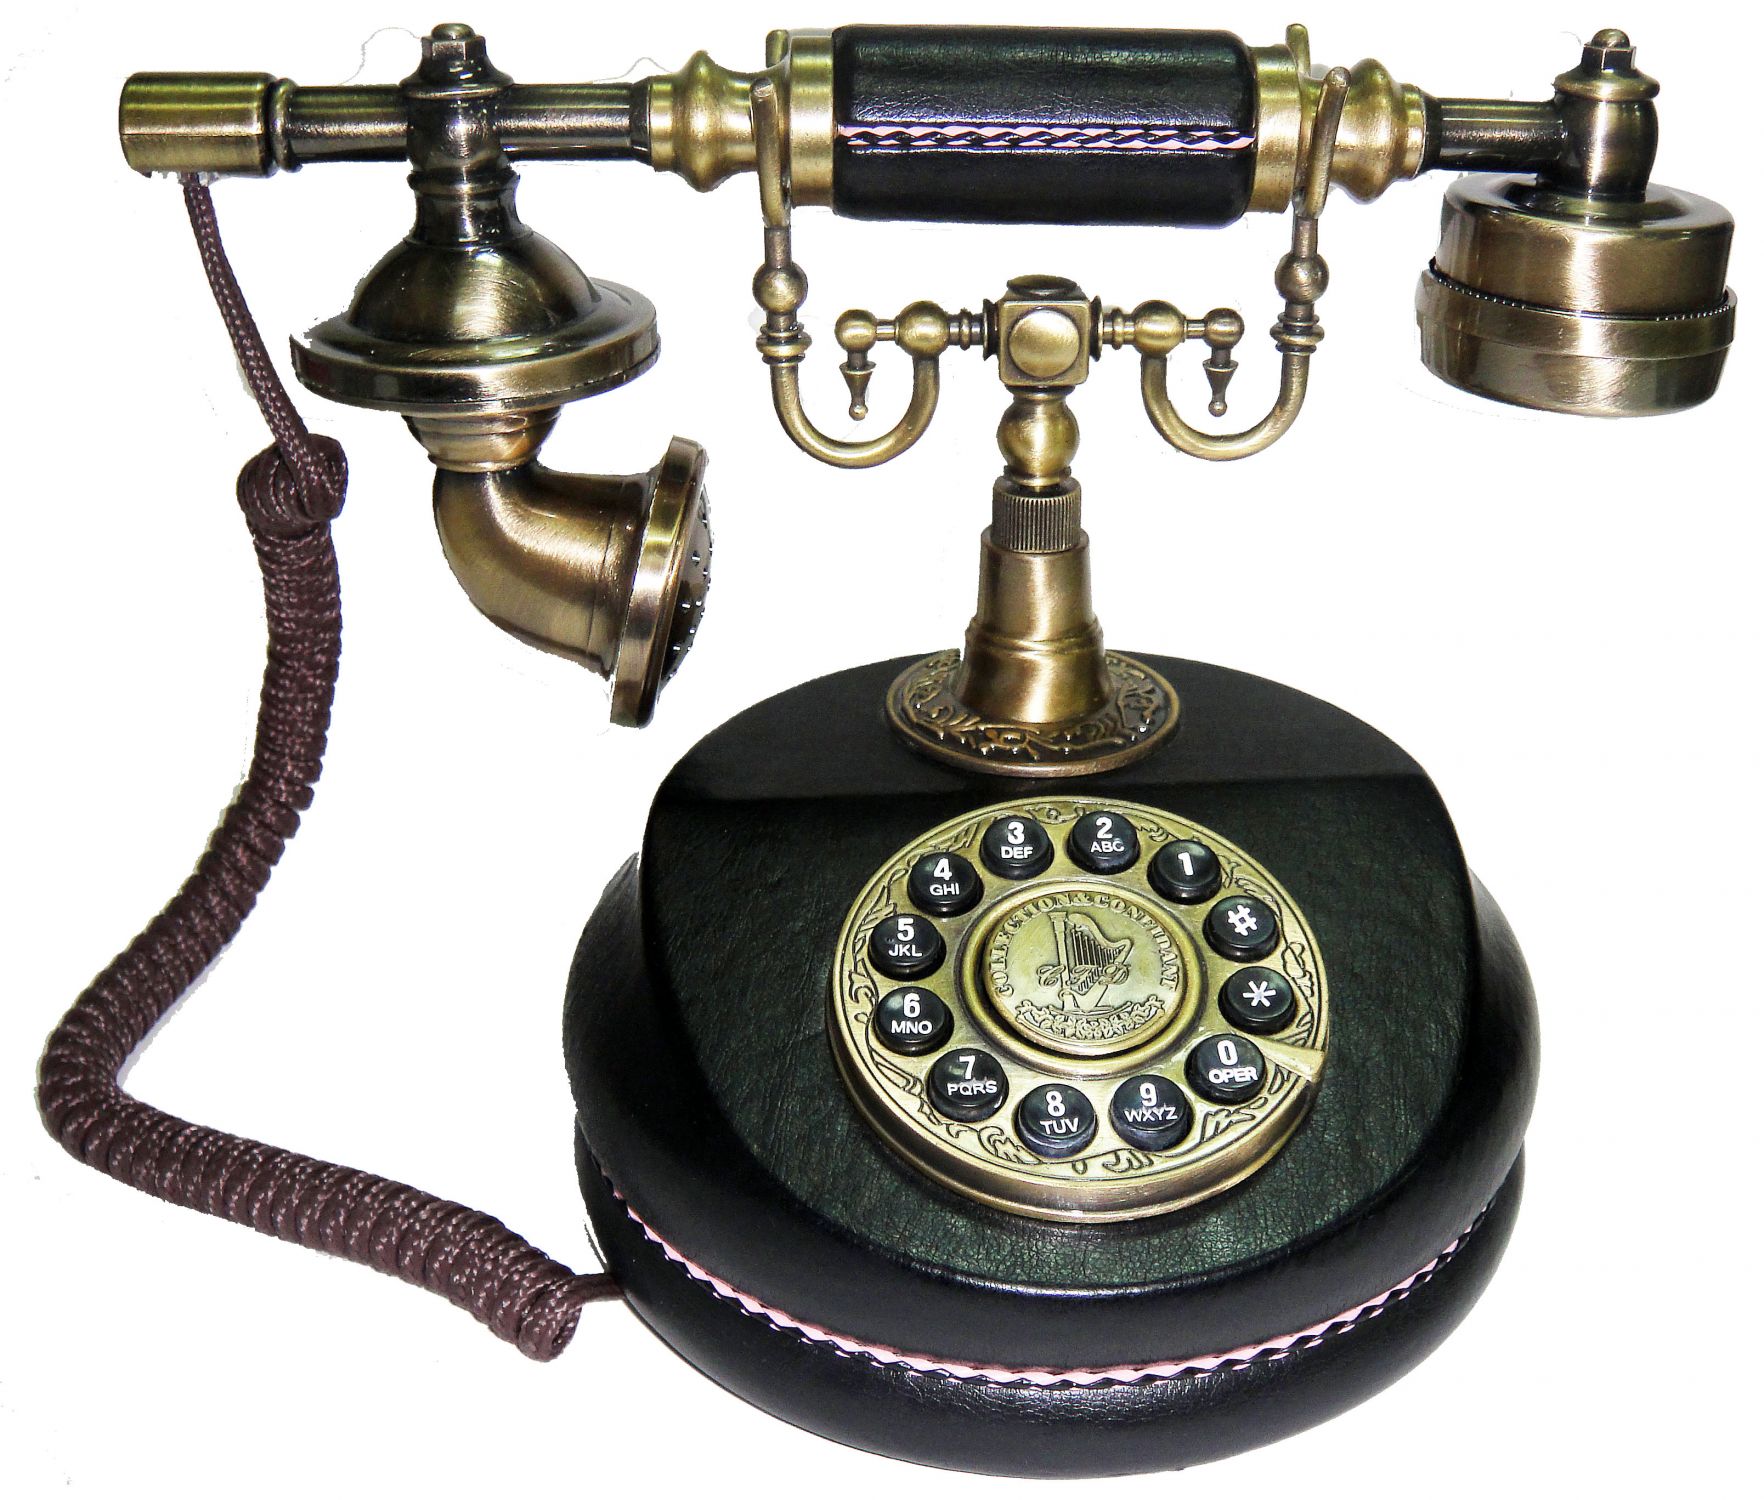 Картинки телефонных аппаратов. Телефонный аппарат. Телефонный аппарат стационарный. Старинный телефонный аппарат. Телефонный аппарат ретро.